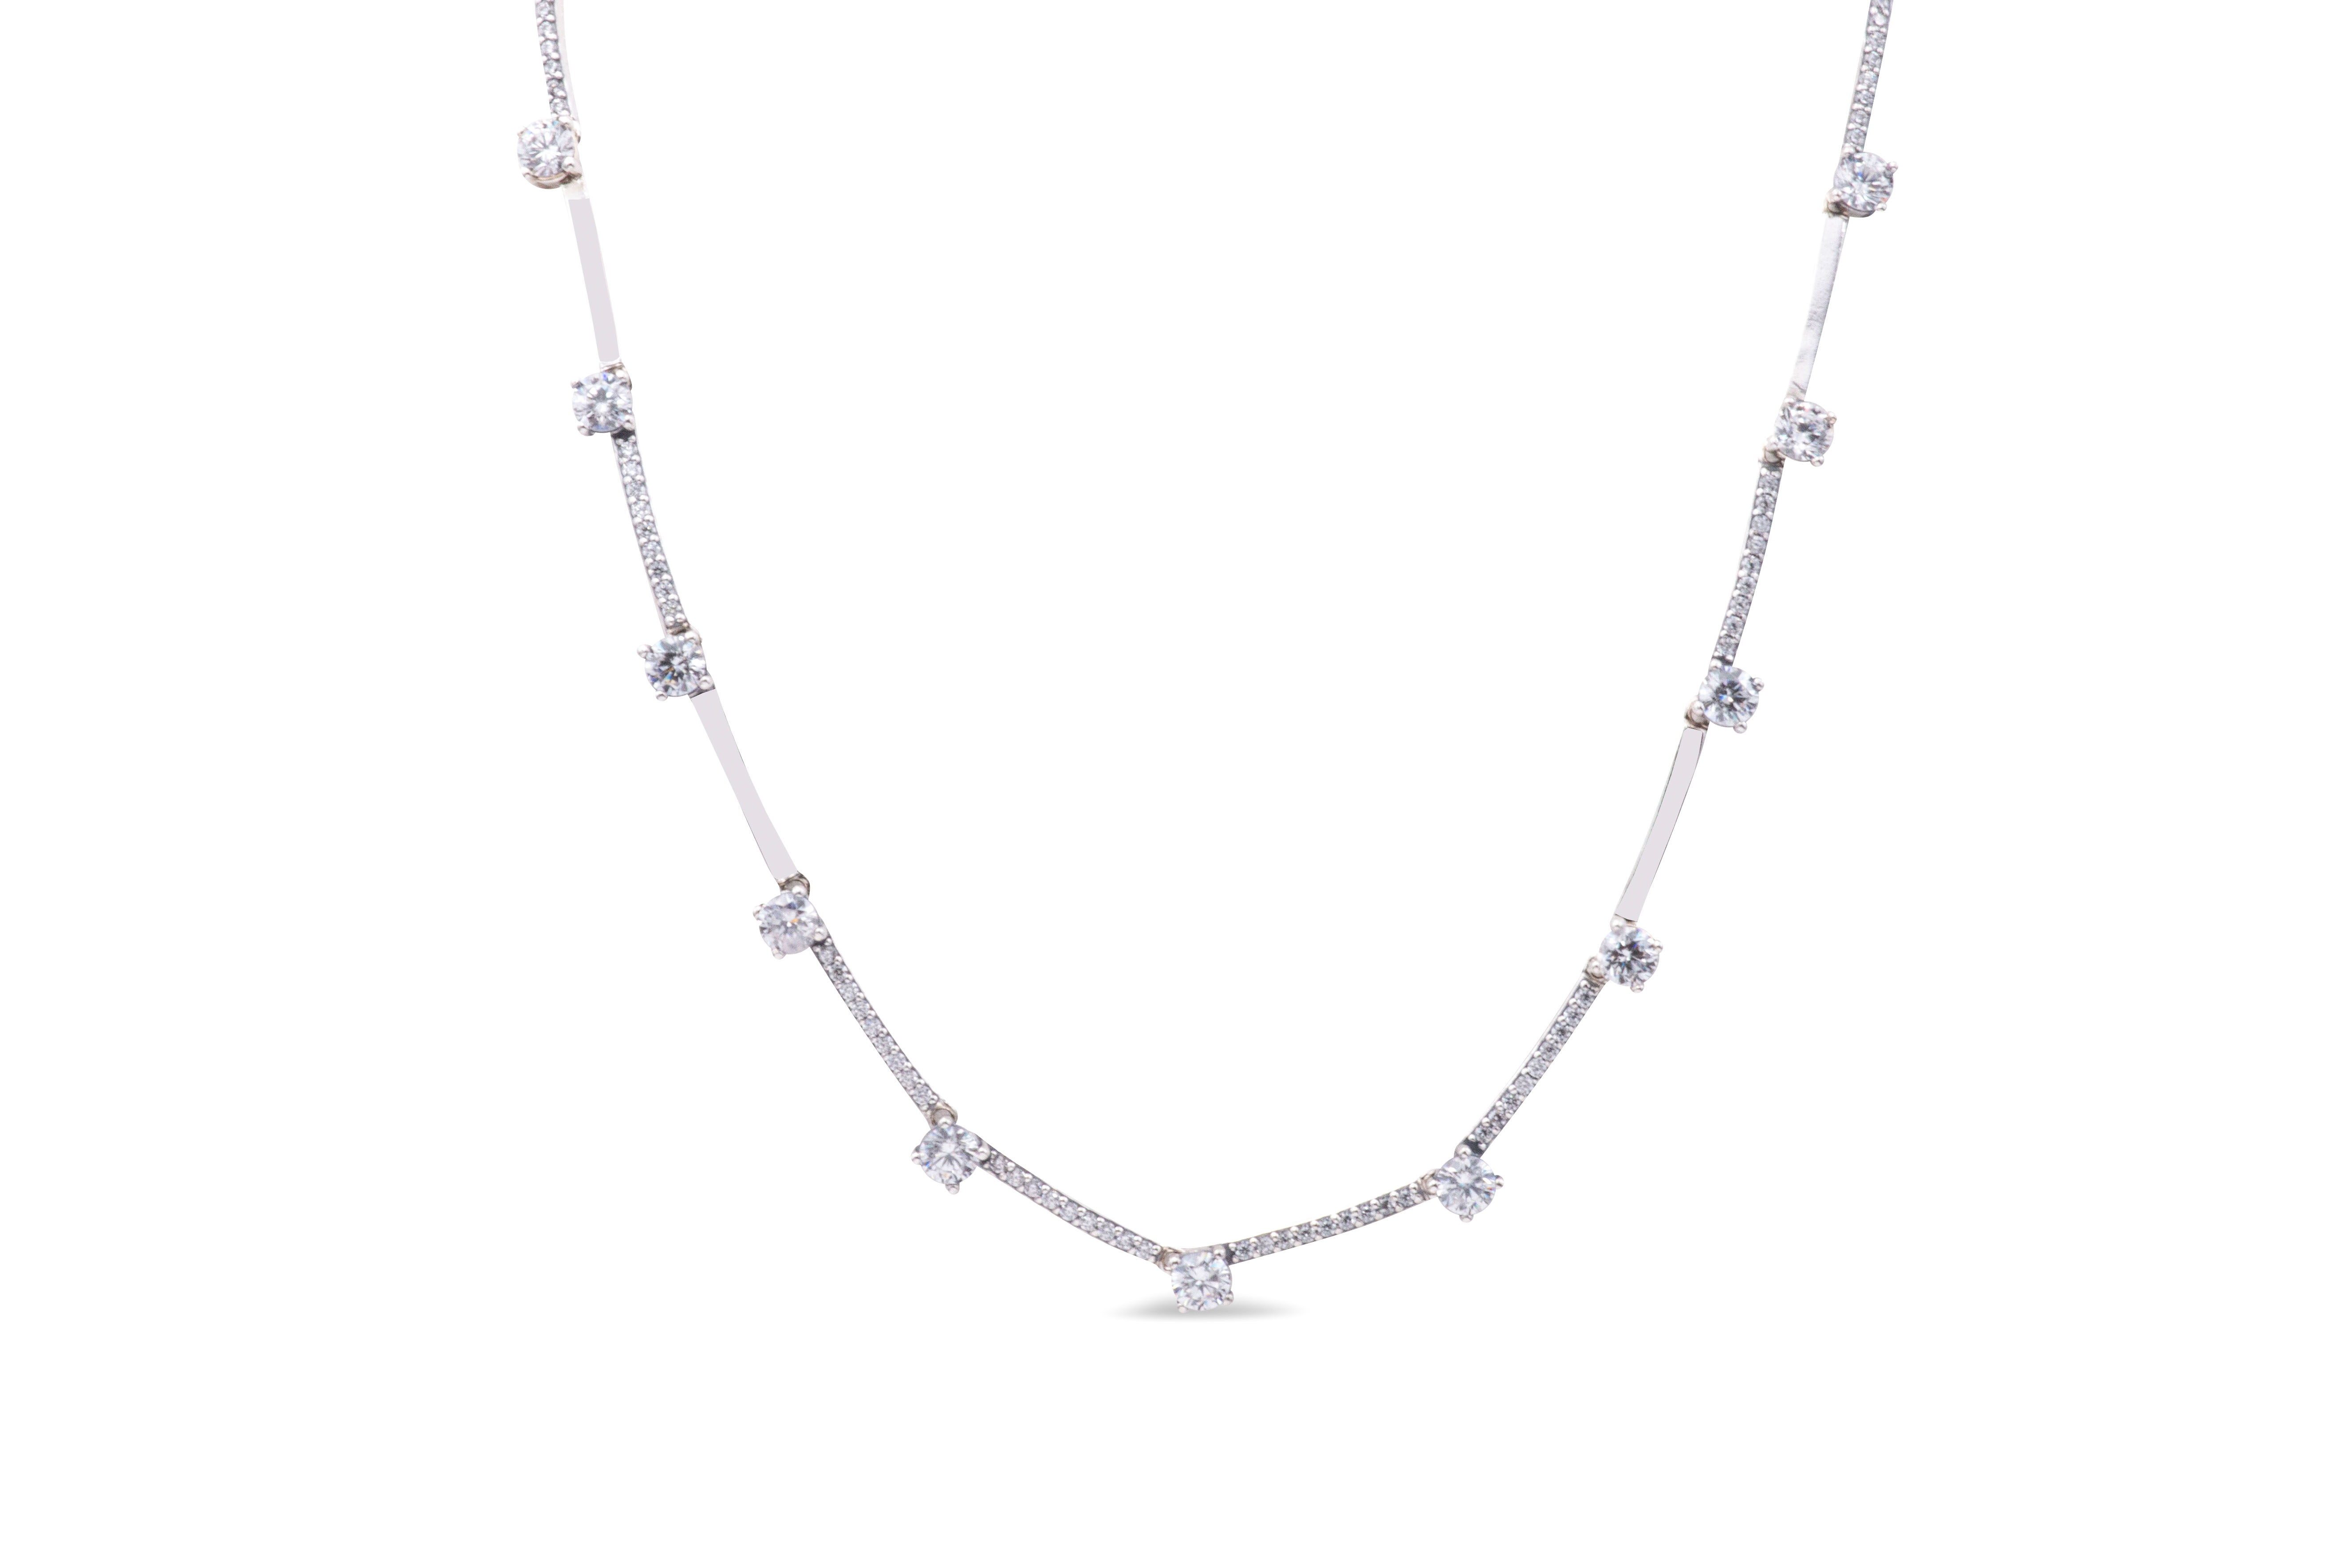 Pandora Sparkling Pave Collier Bars Necklace